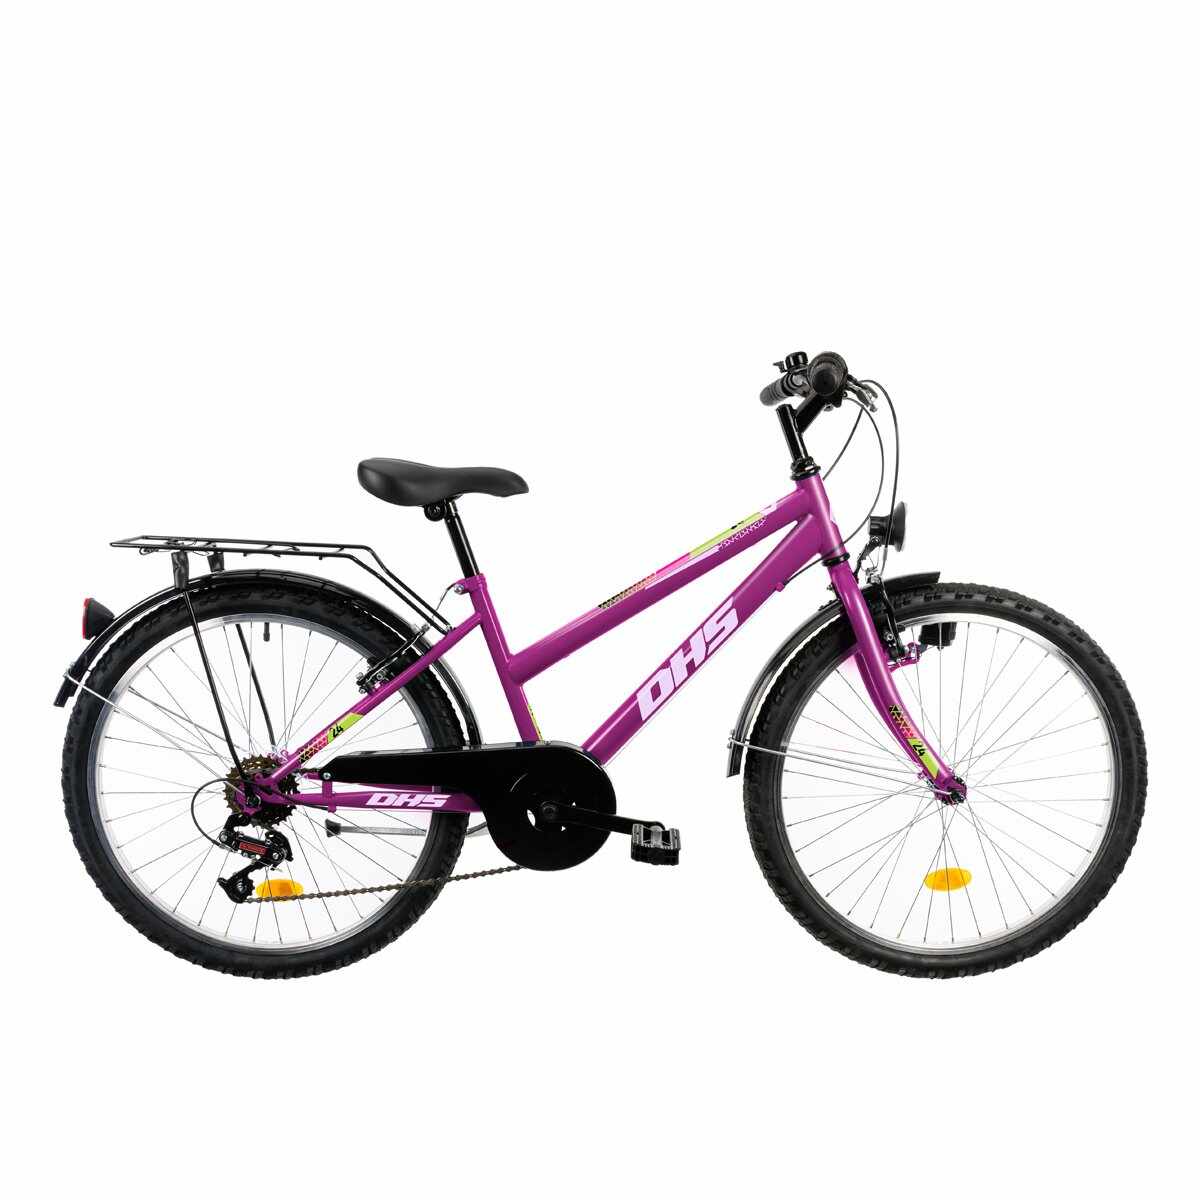 Bicicleta Copii Dhs Terrana 2414 - 24 Inch, Violet